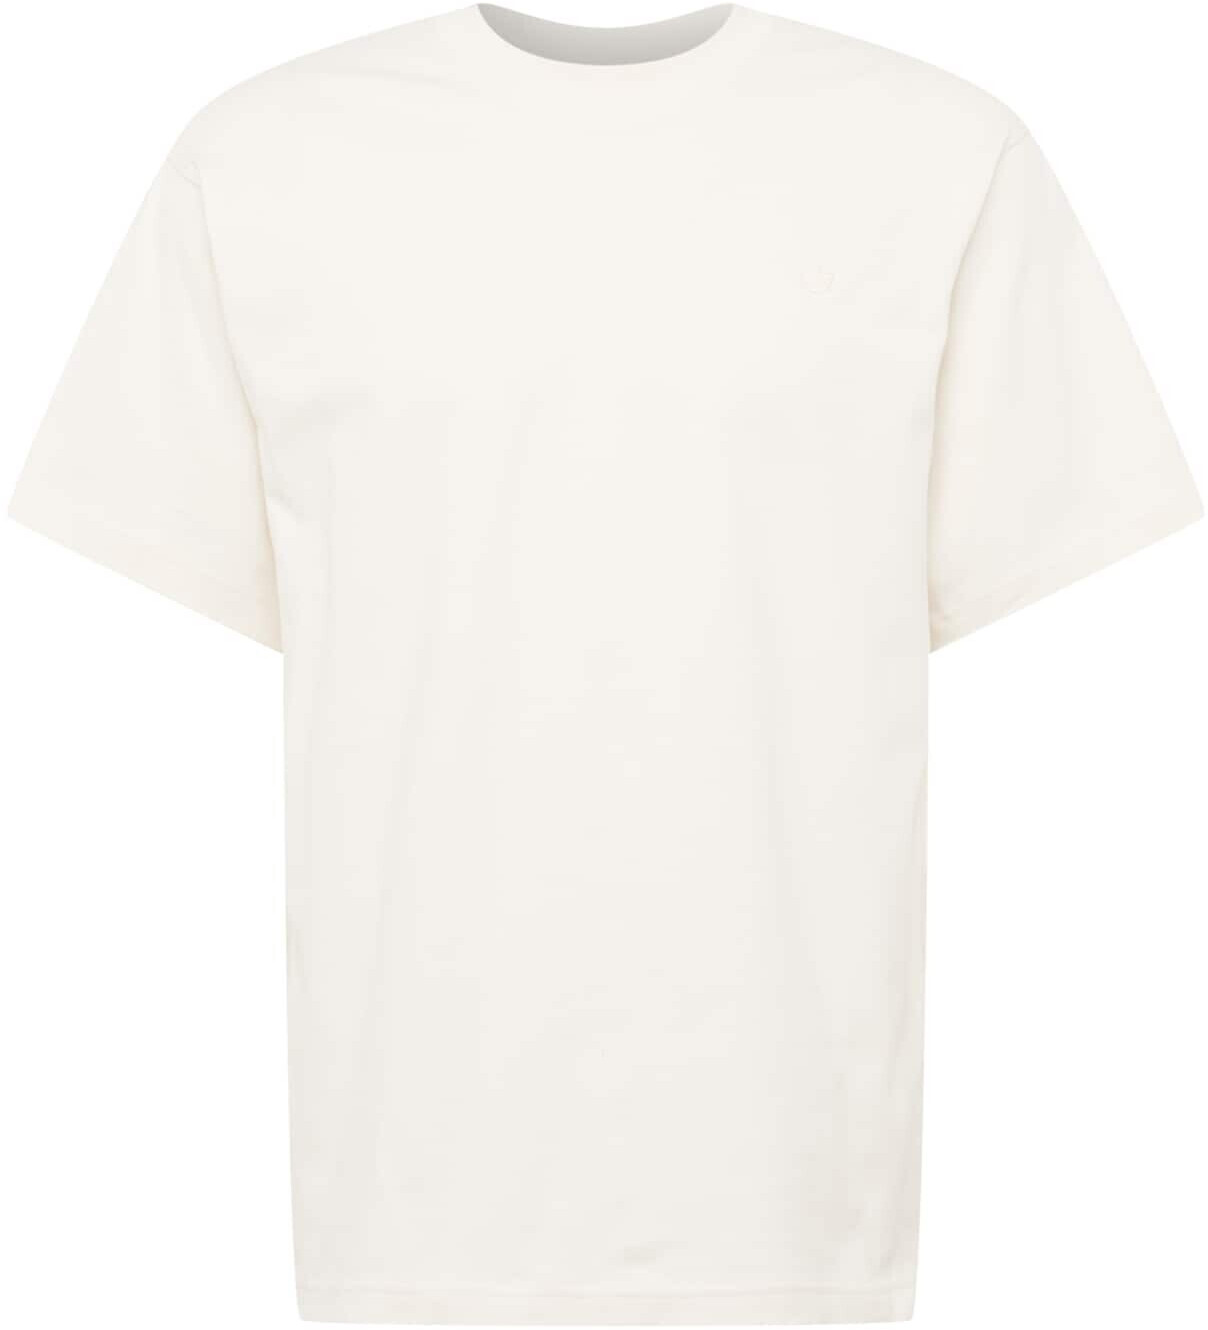 Adidas Adicolor Contempo T-Shirt wonder white (HK2891) ab 27,90 € |  Preisvergleich bei